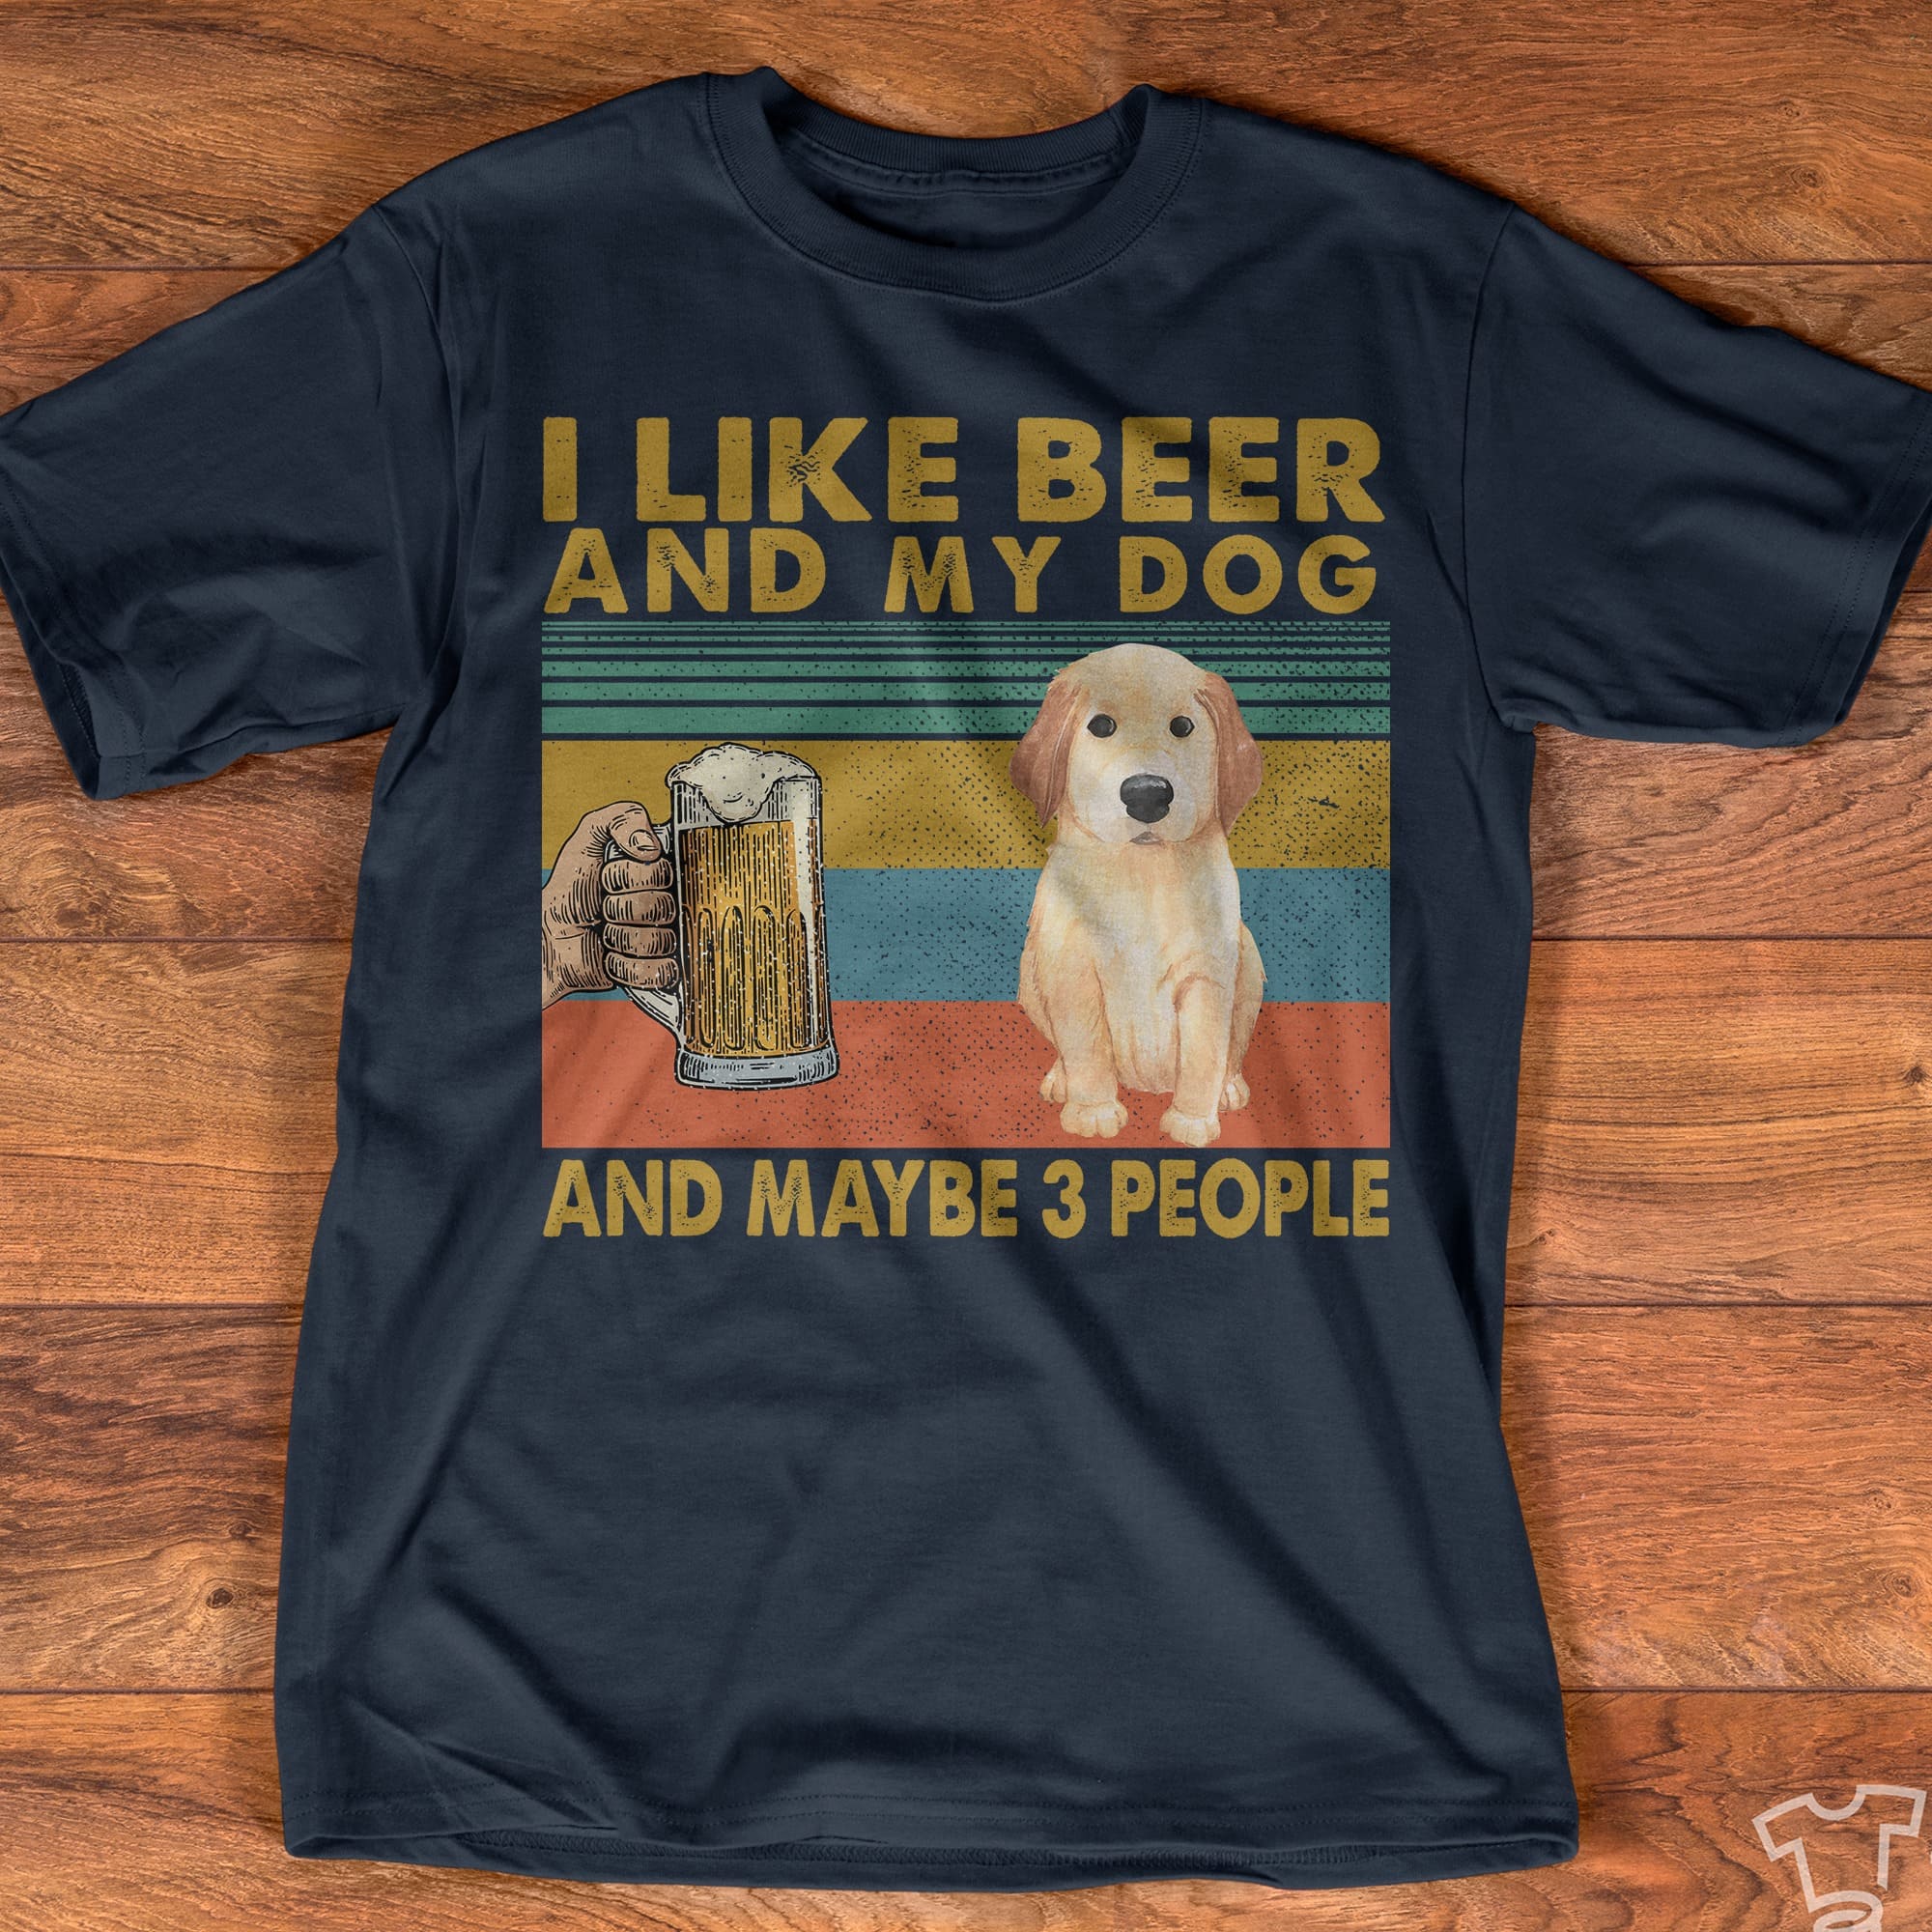 do dogs like beer